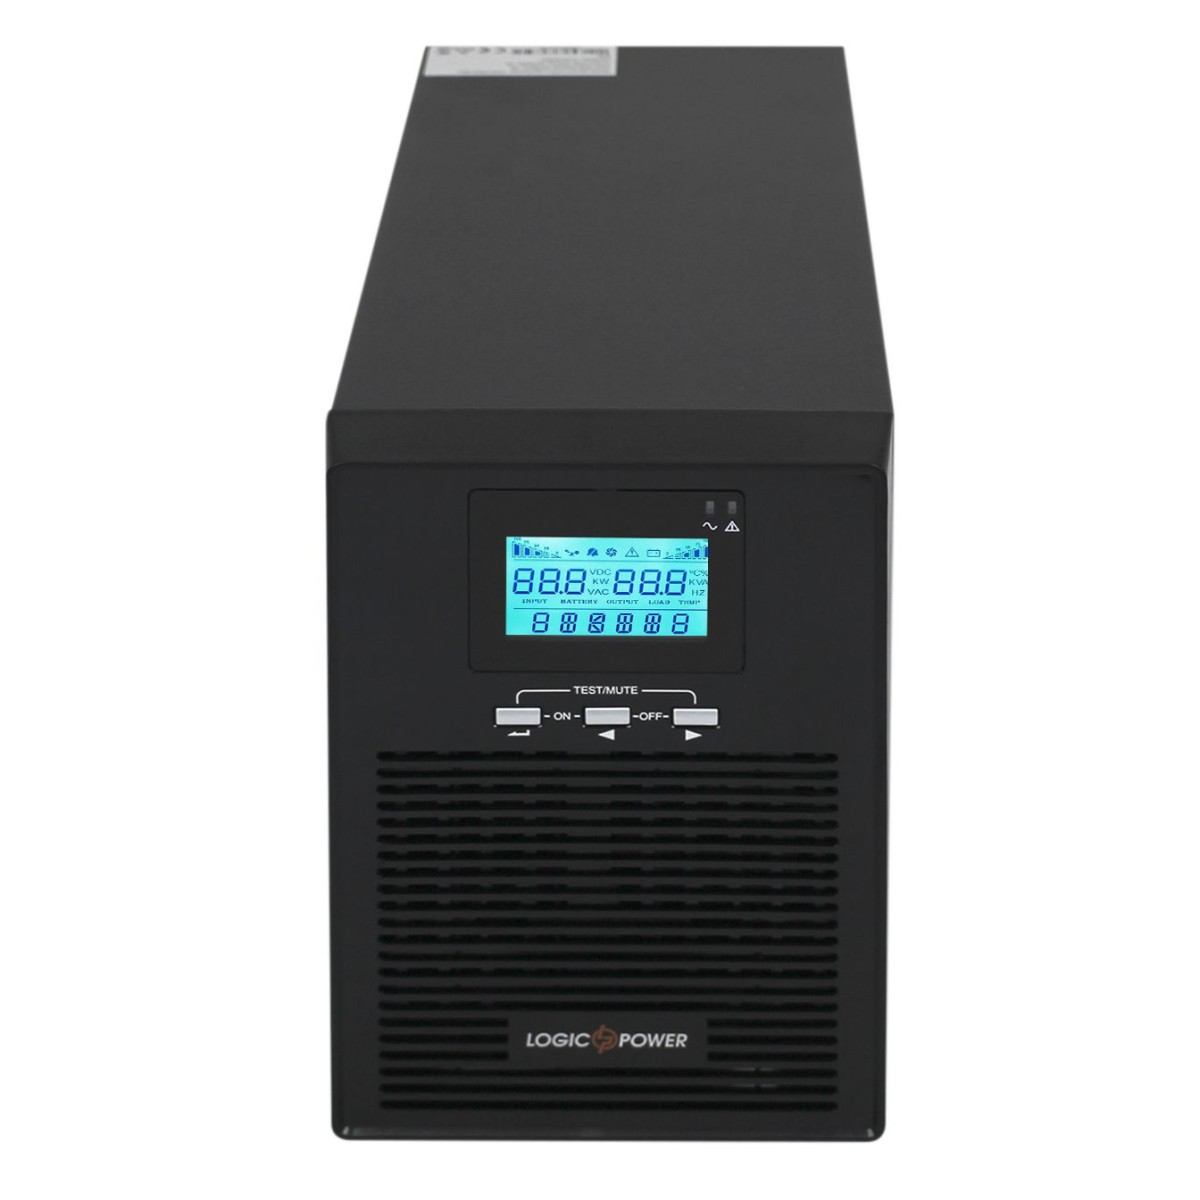 ИБП Smart-UPS LogicPower-1000 PRO 36V (without battery) 256_256.jpg